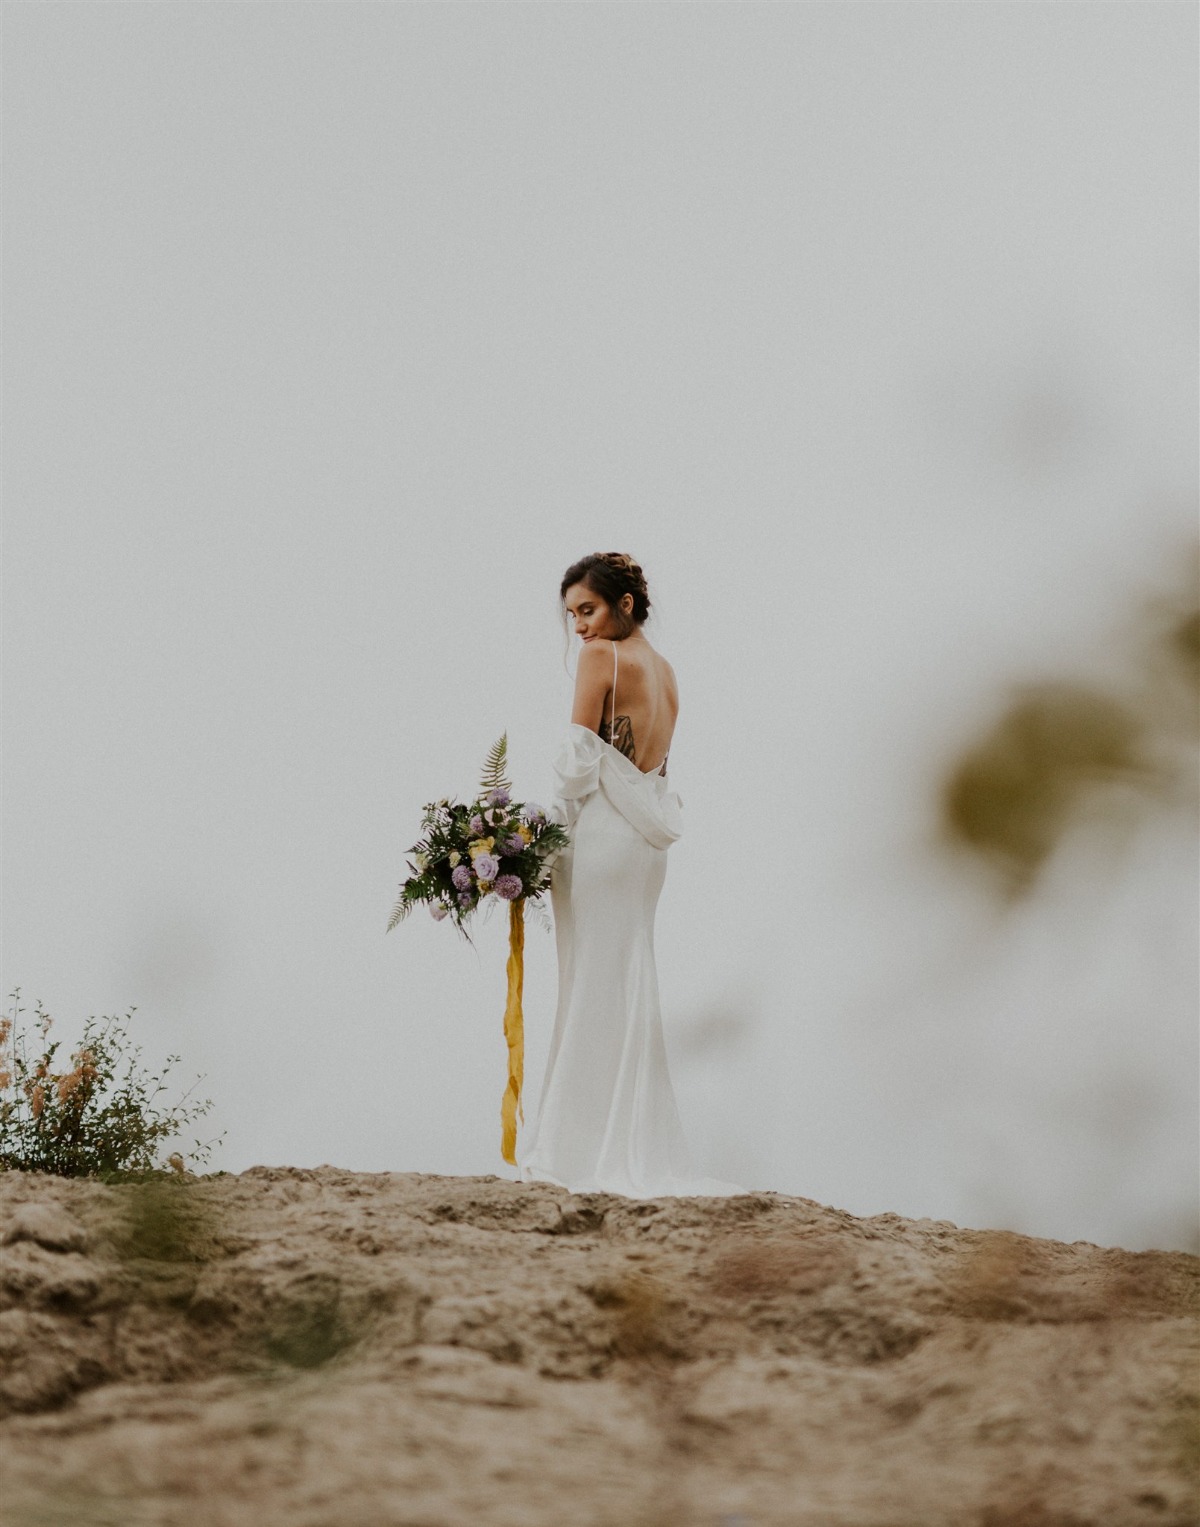 Grecian-inspired wedding dress